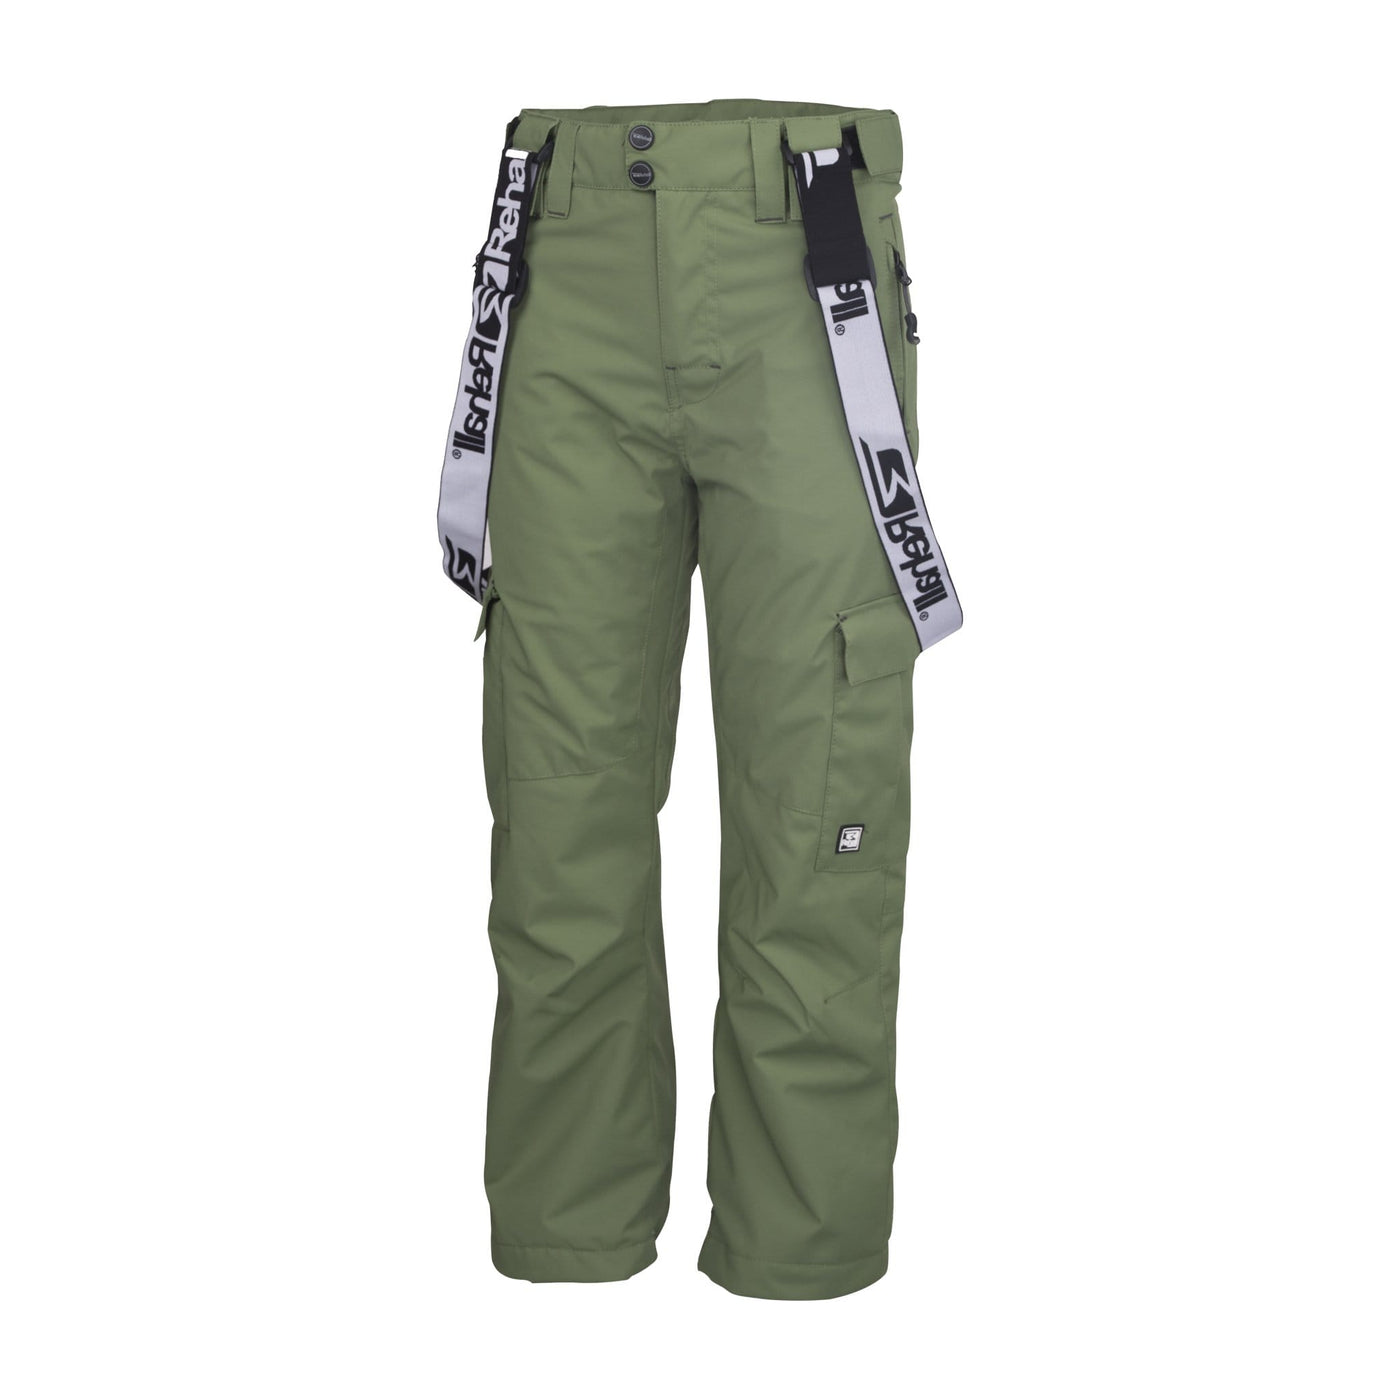 SnowKids Outerwear Pants Rehall Dizzy Jr Boys Snow Pant - Moss Green